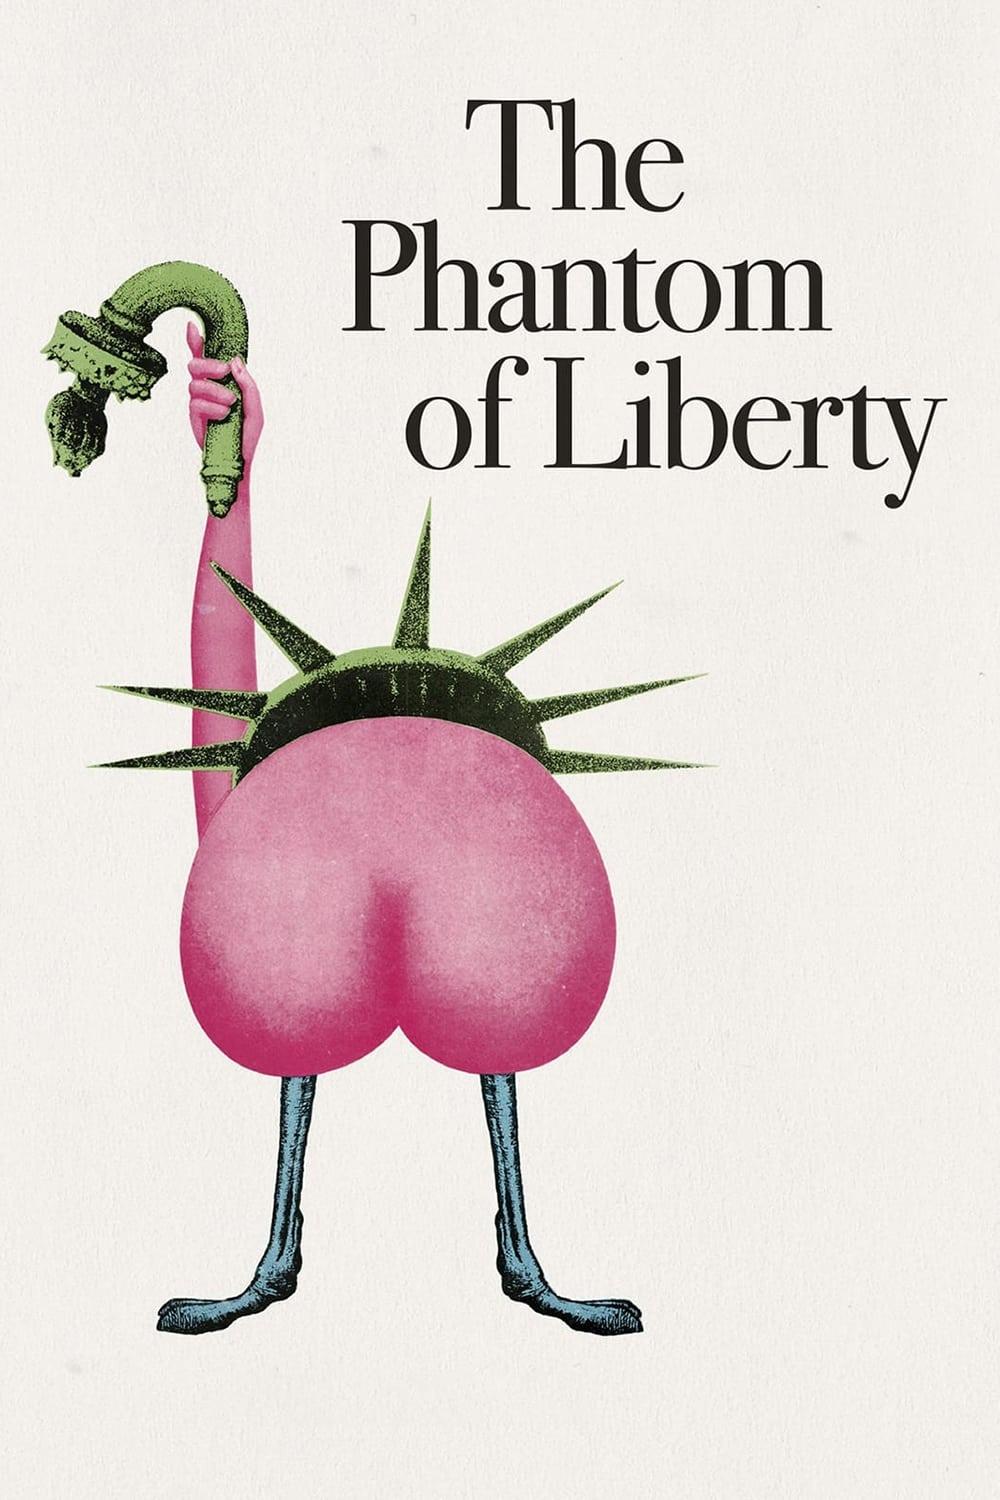 The Phantom of Liberty poster